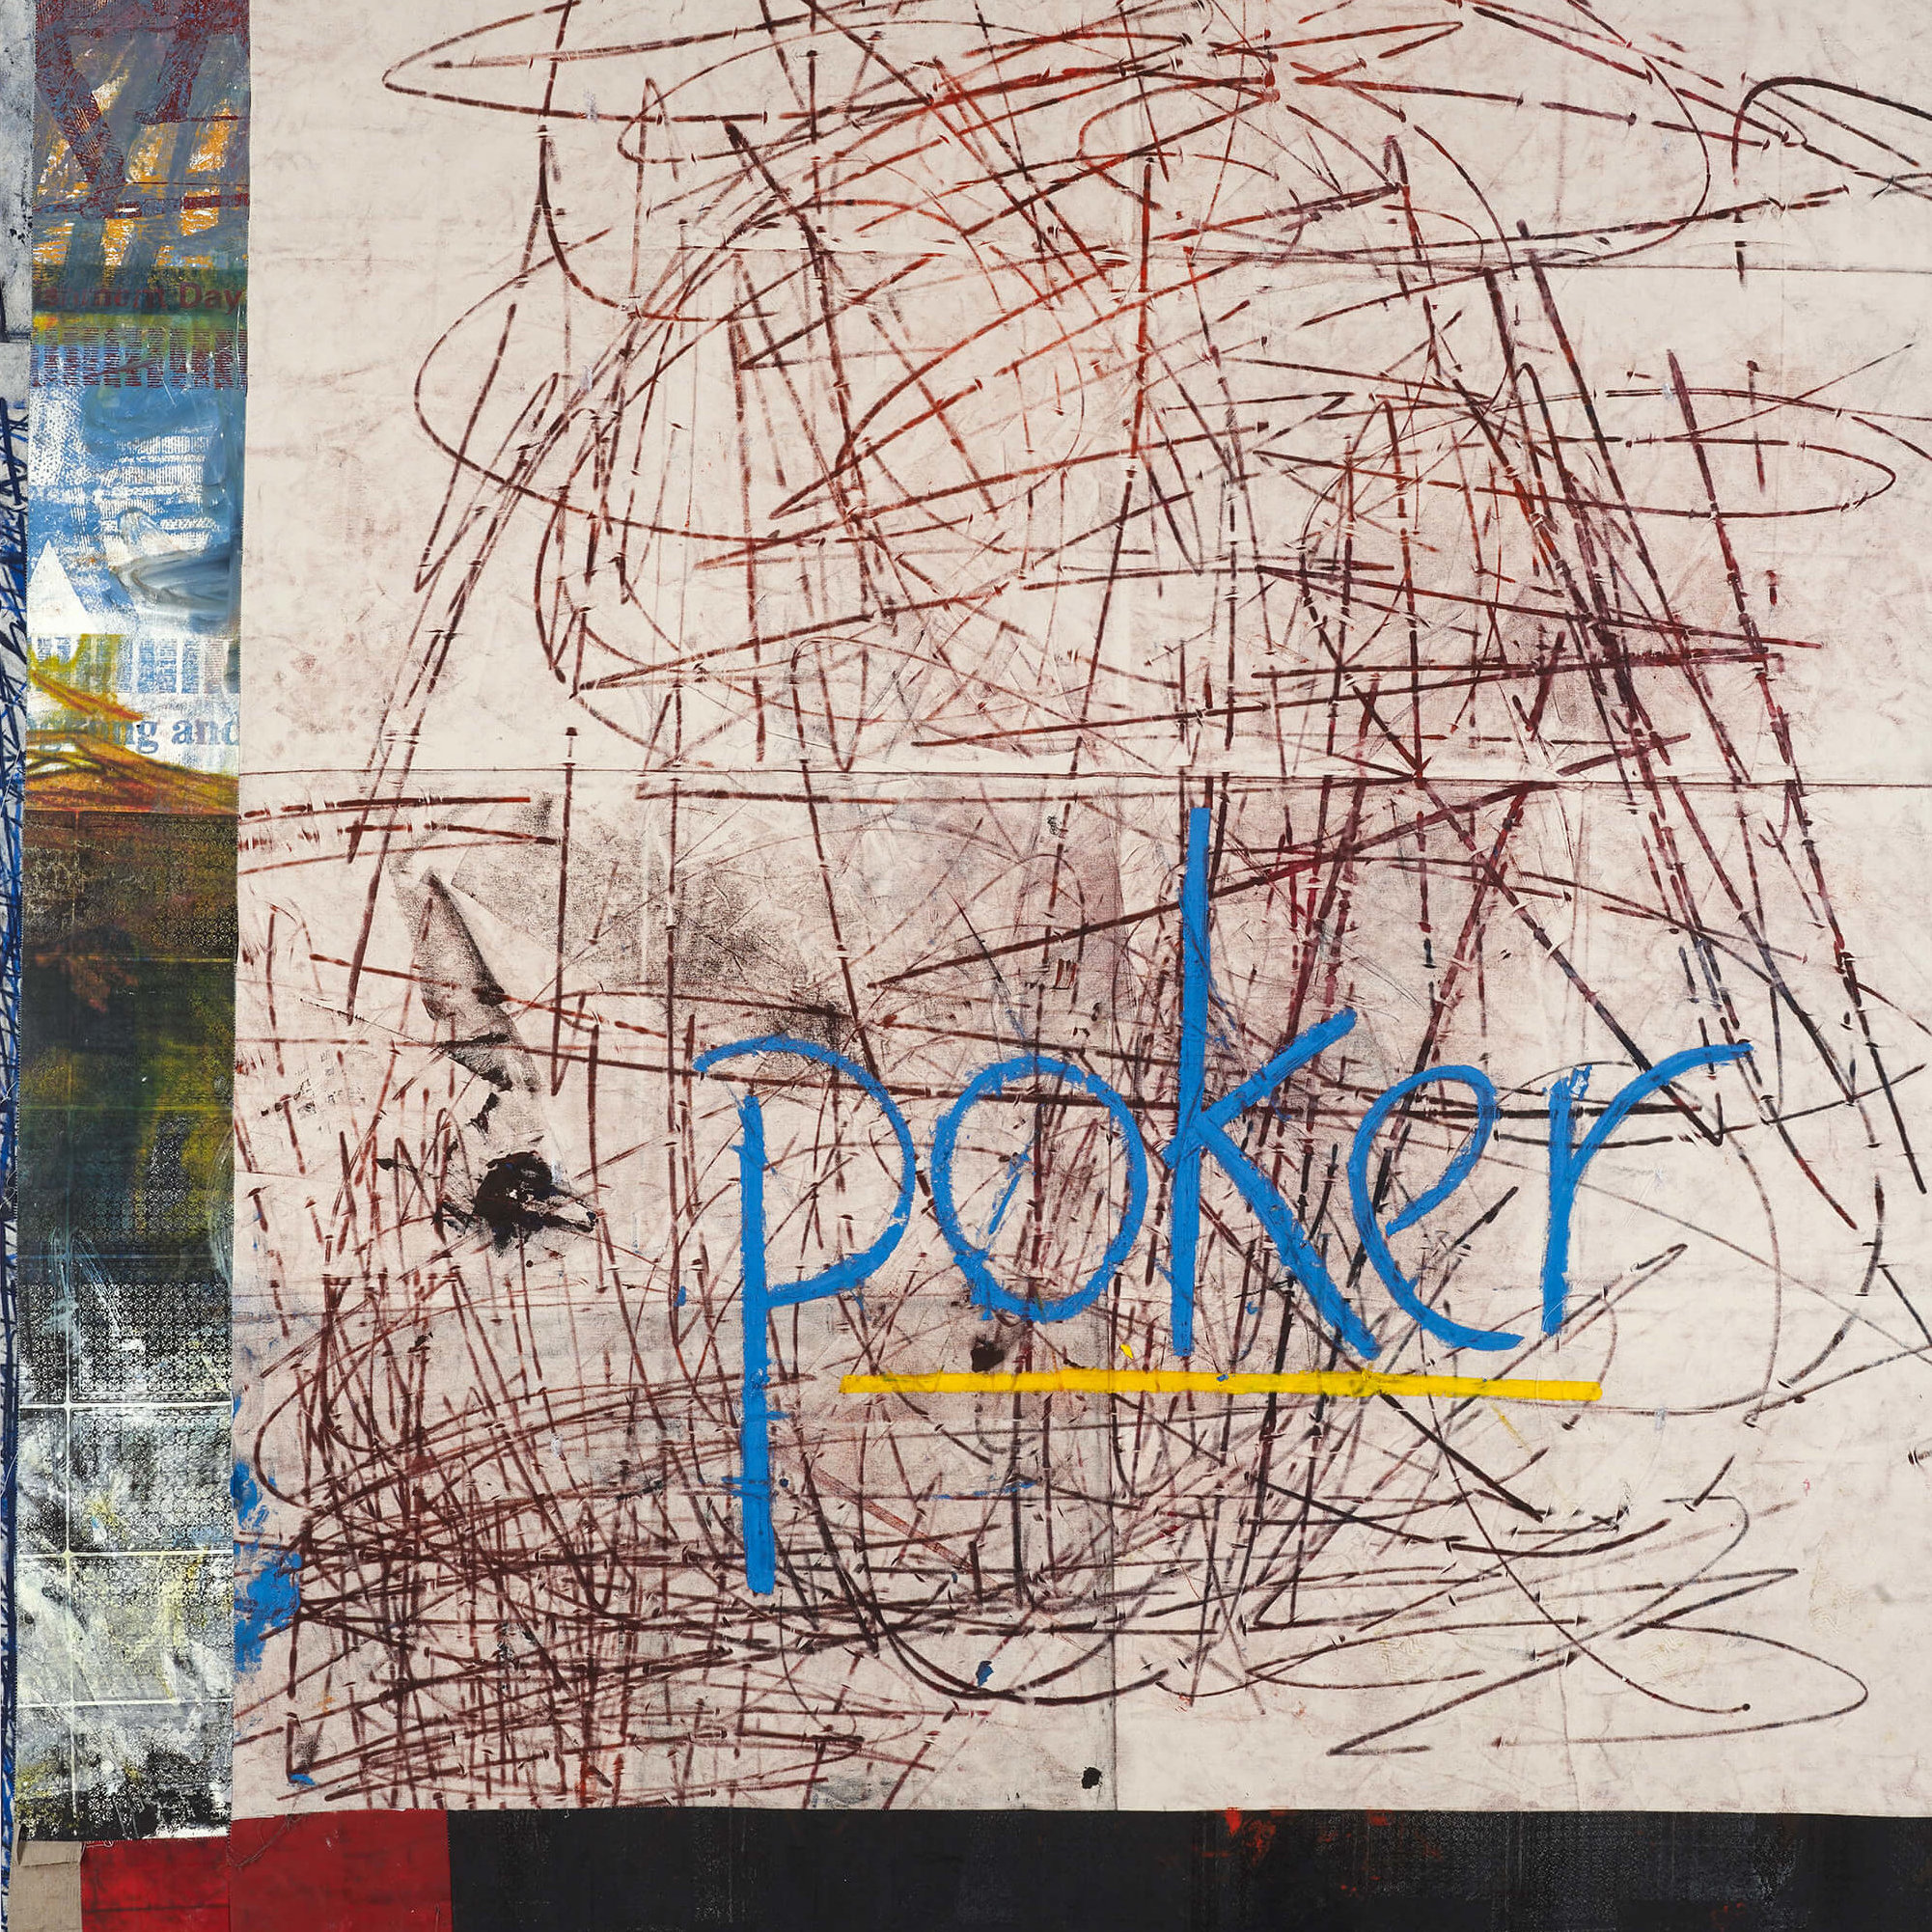 poker (2014-15) by Oscar Murillo